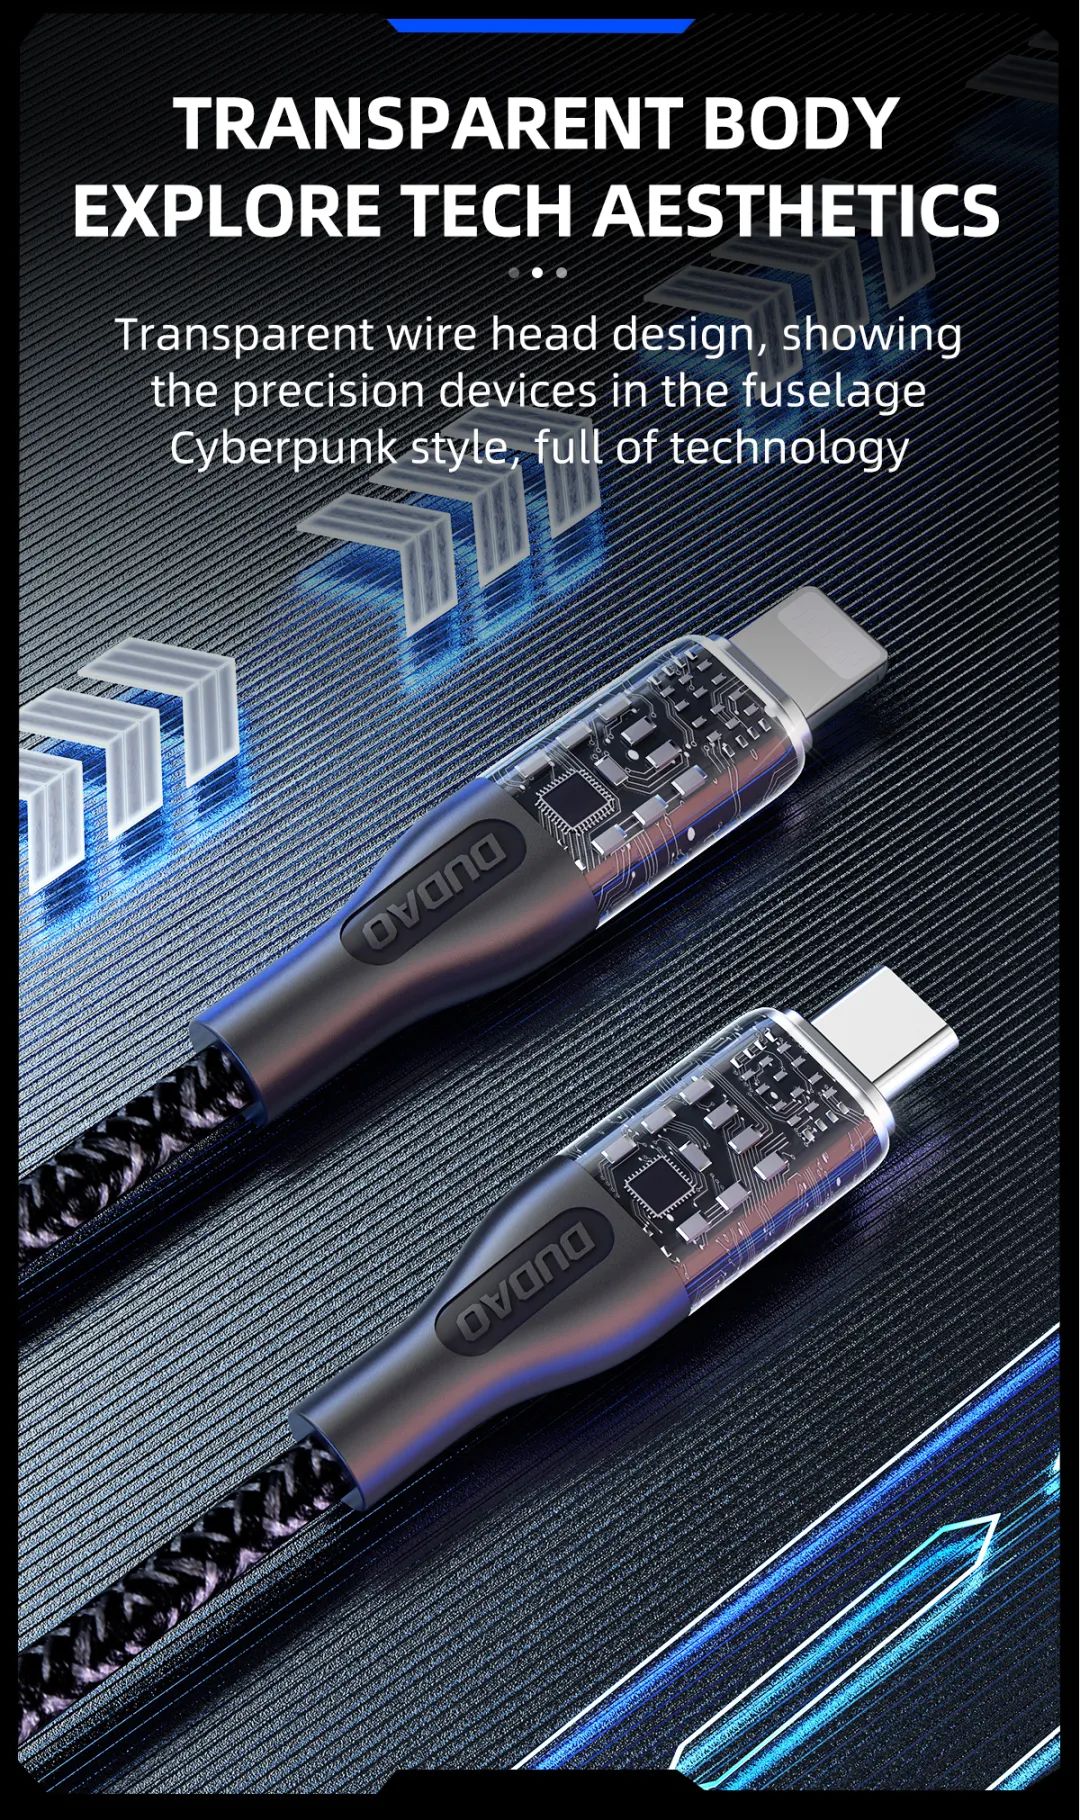 Dudao 120W USB/Type-C 轉 Type-C 閃充 透明外殼 1米快充線 雙核芯片防短路 L22系列